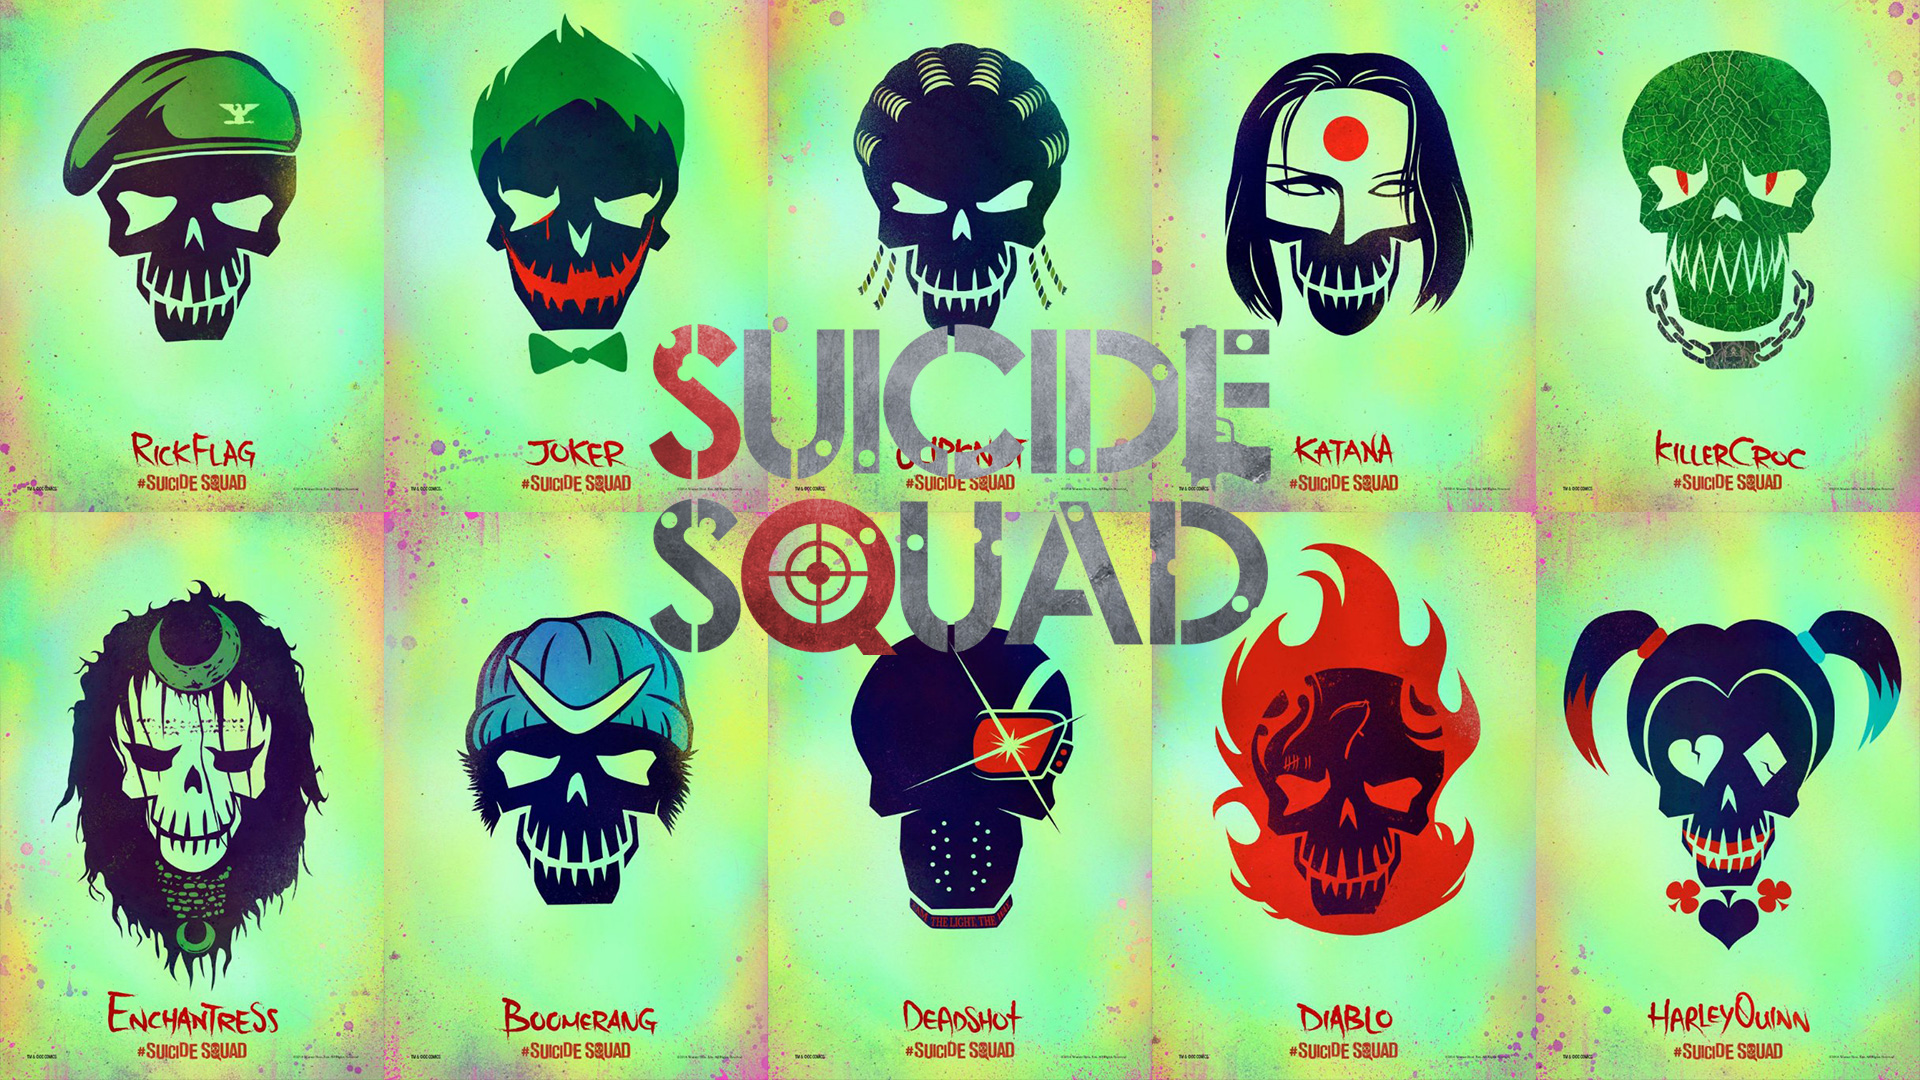 [48+] Suicide Squad HD Wallpaper on WallpaperSafari